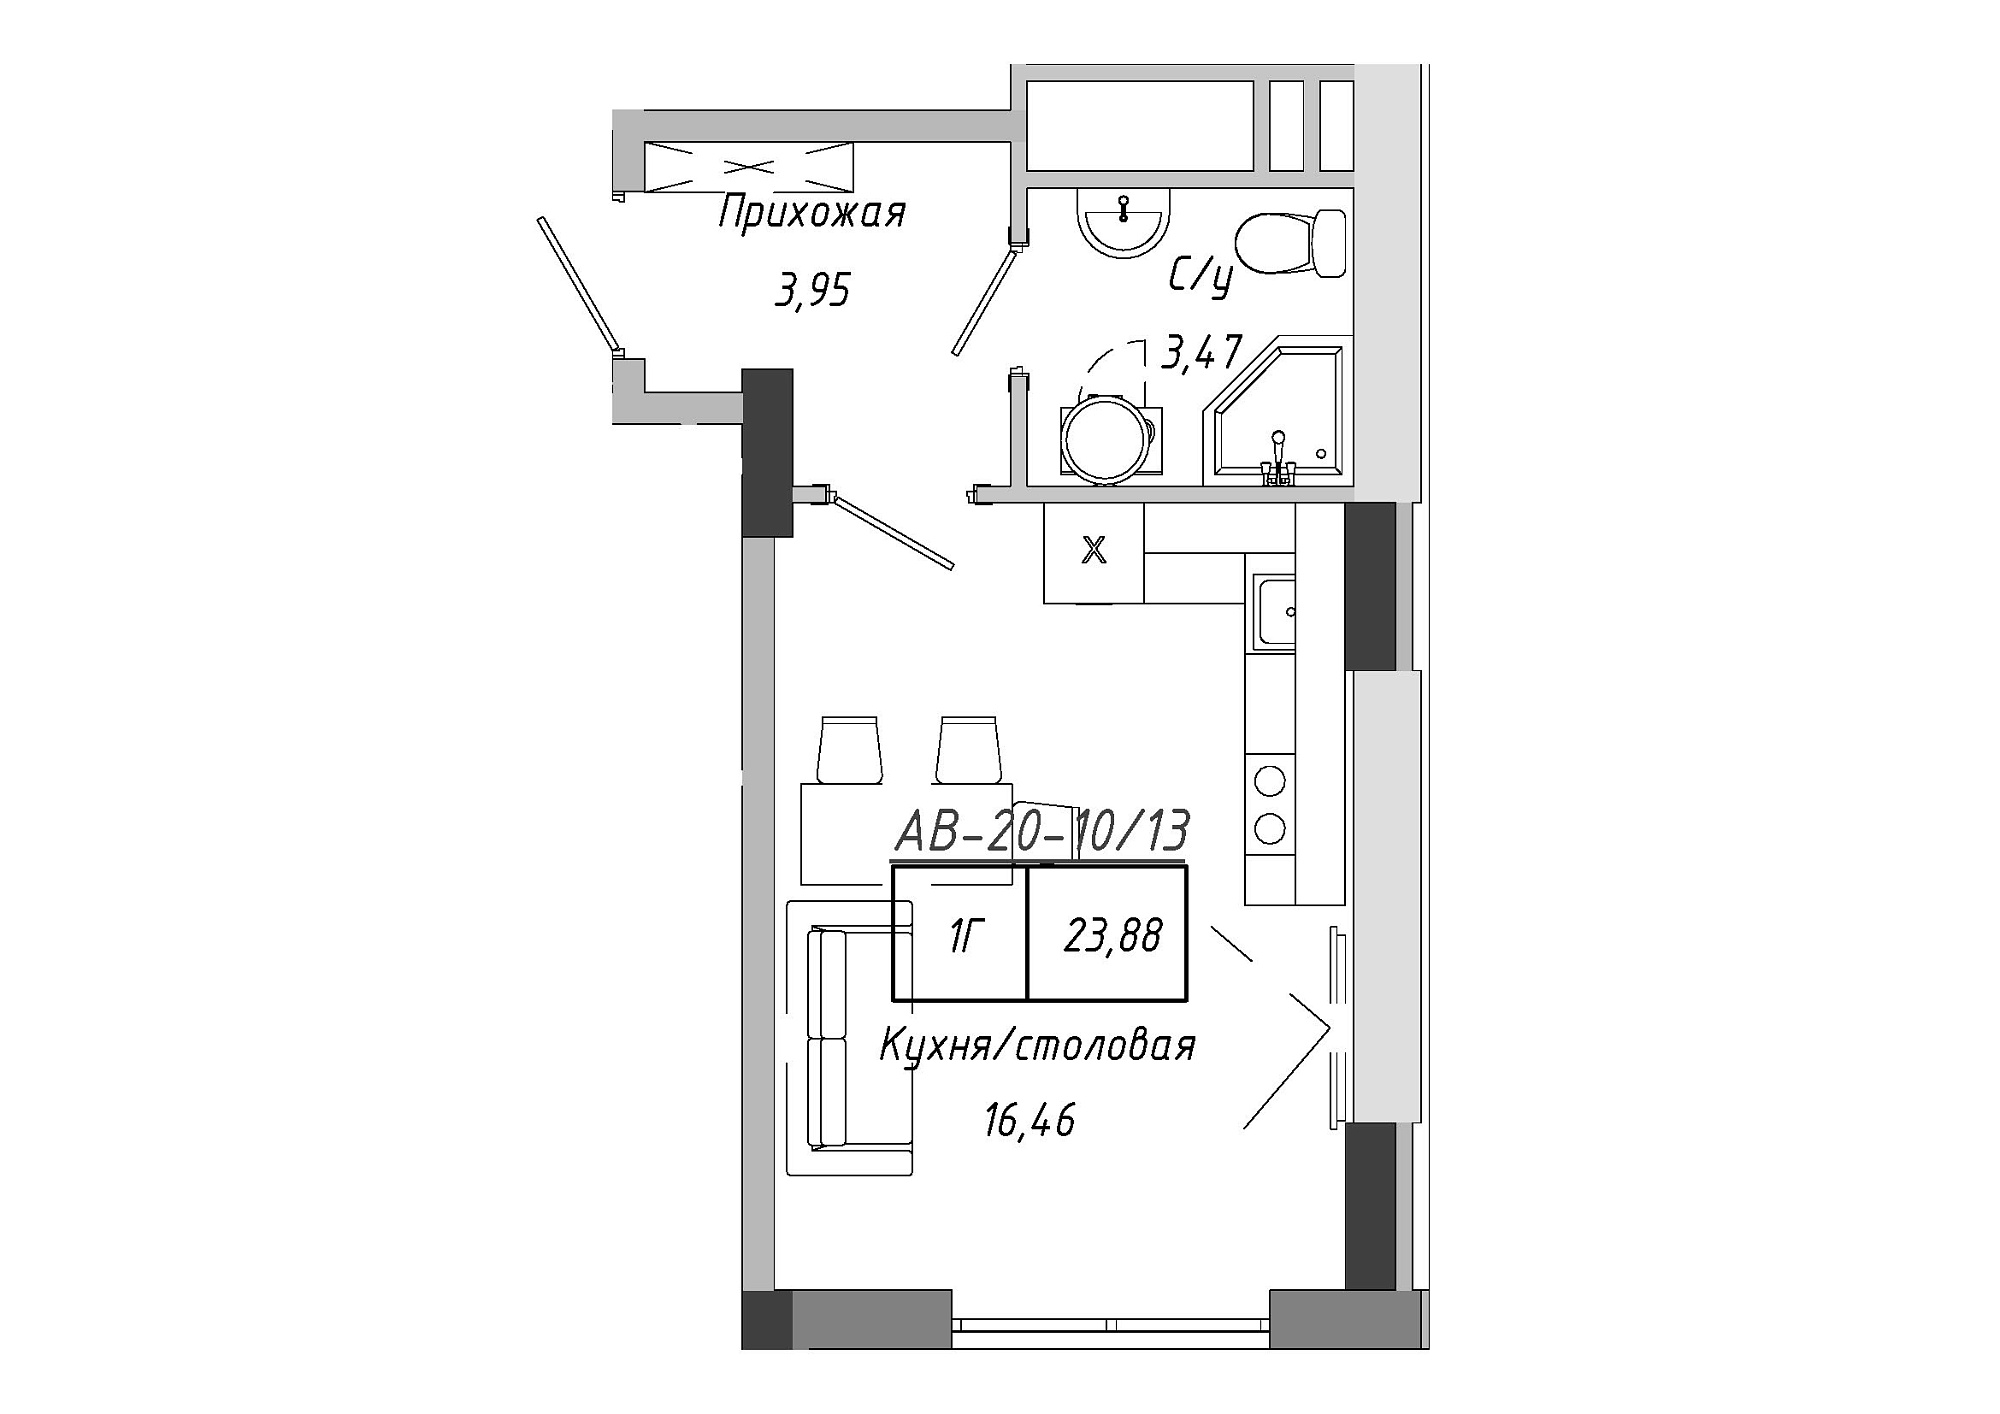 Planning Smart flats area 23.4m2, AB-20-10/00013.